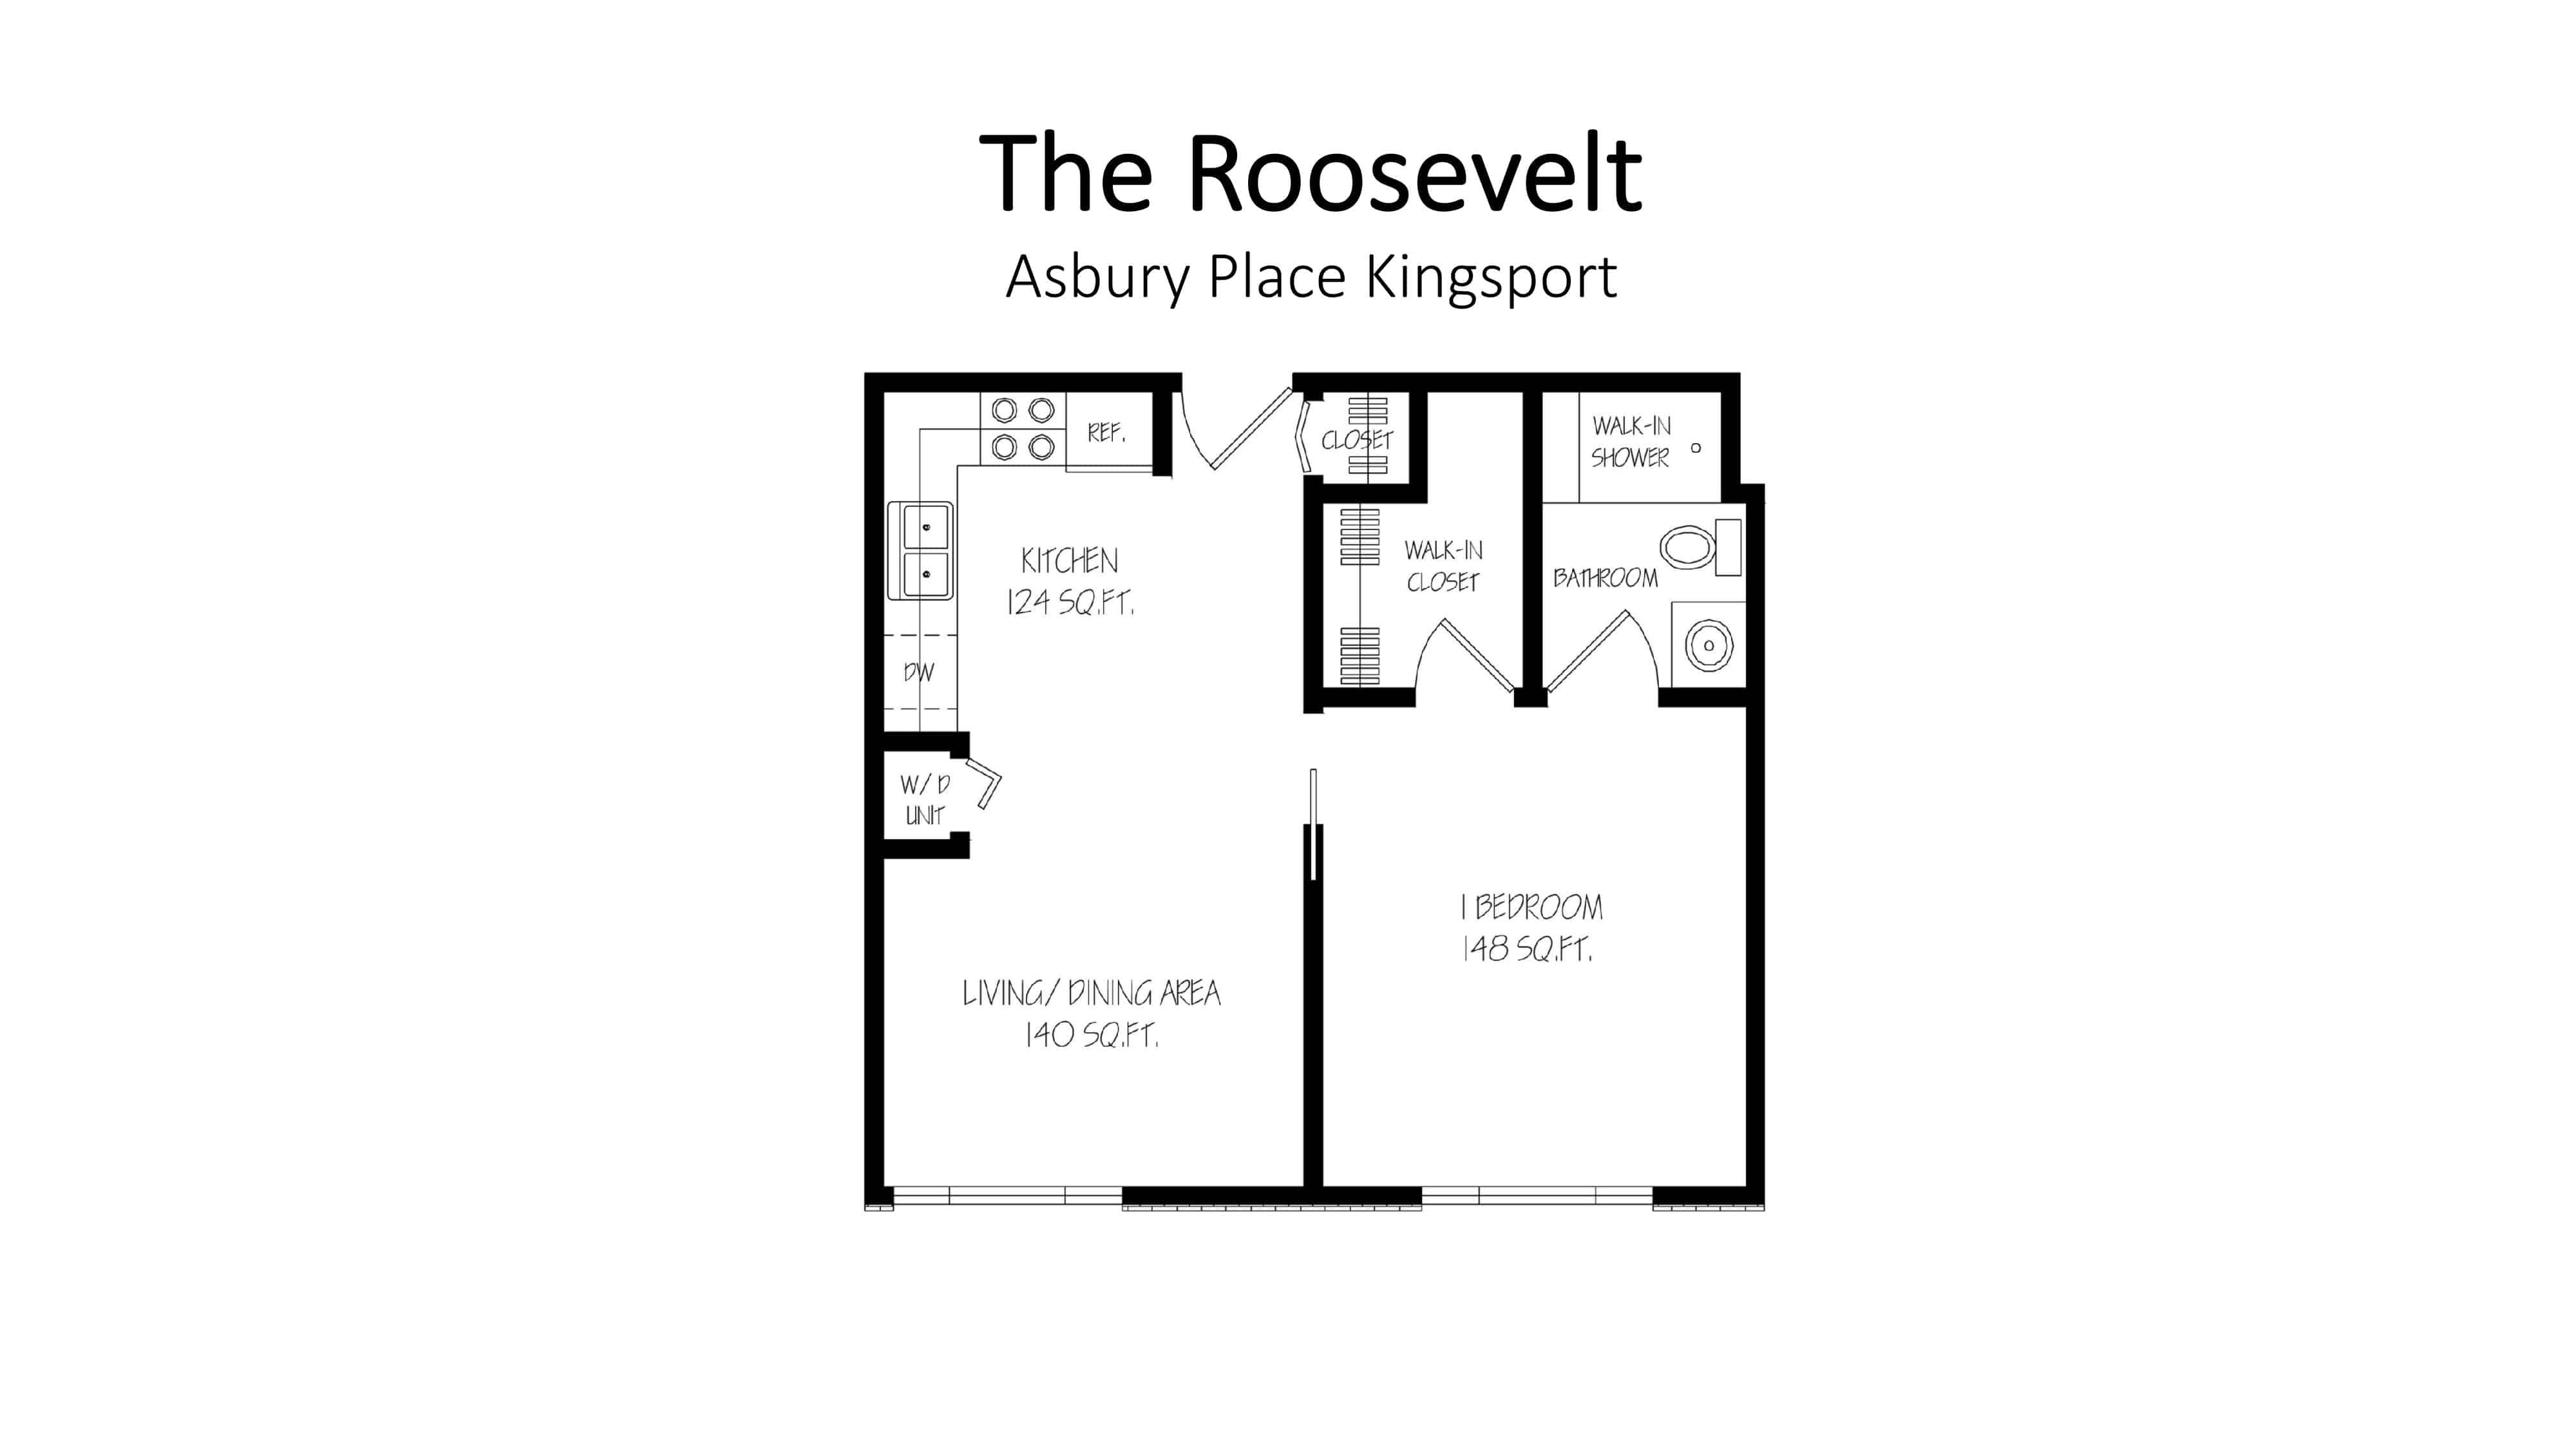 Asbury Place Kingsport The Roosevelt Floorplan